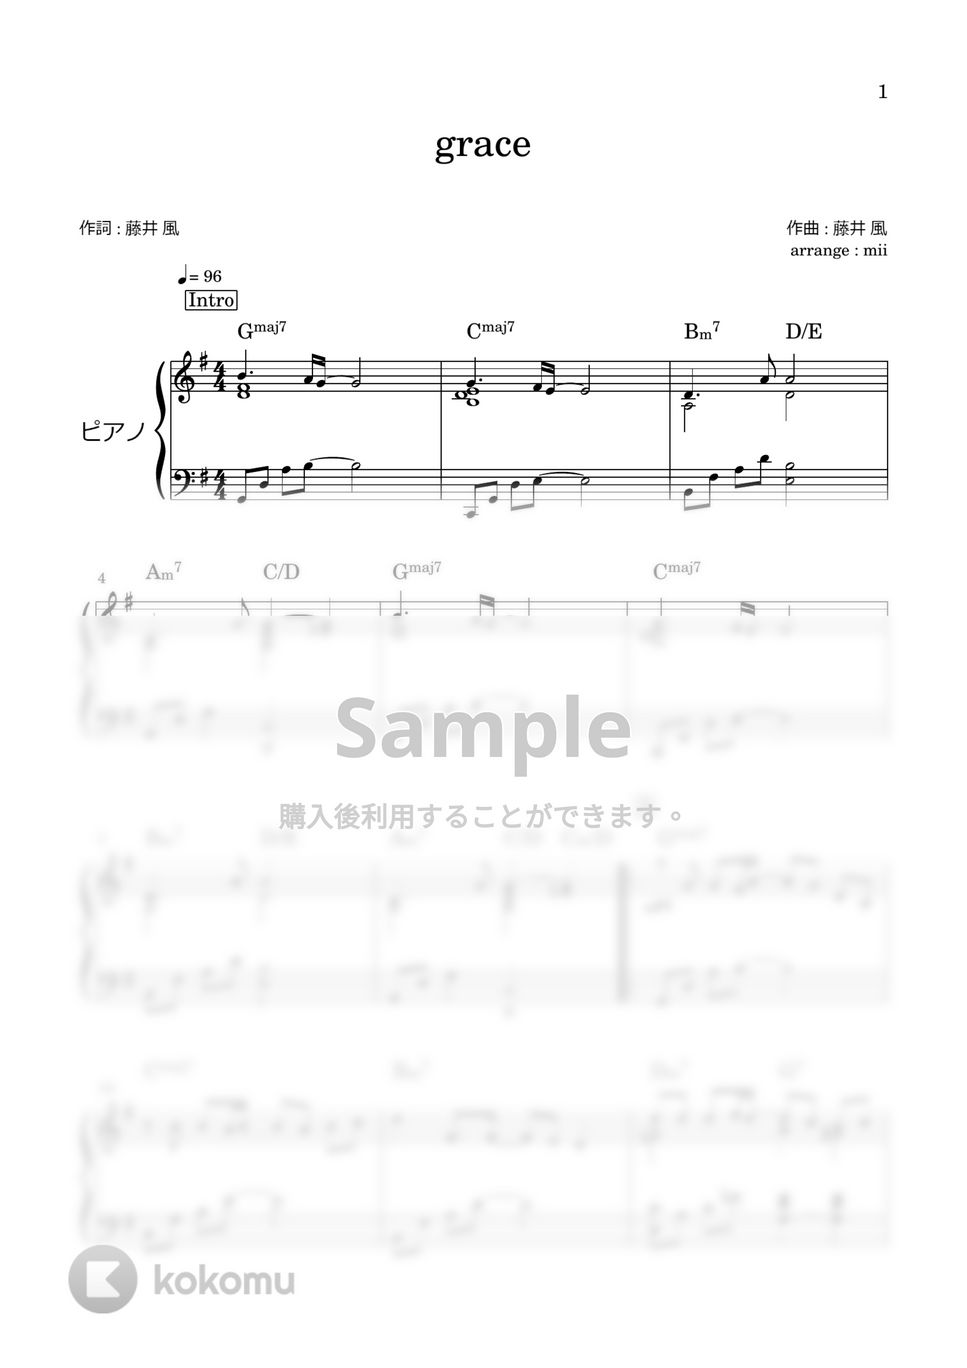 藤井風 - grace (twitter ver.) by miiの楽譜棚